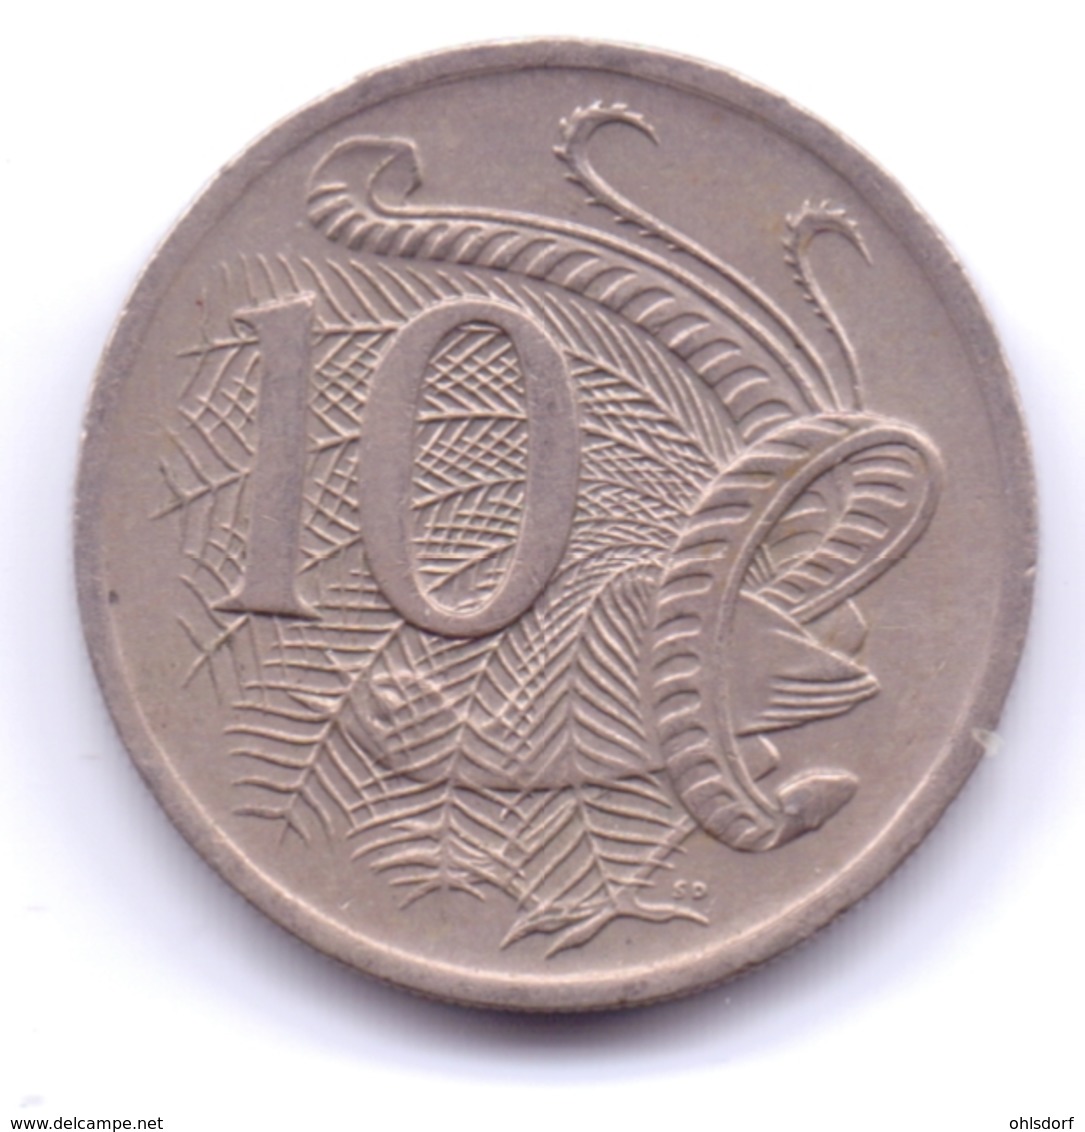 AUSTRALIA 1976: 10 Cents, KM 65 - 10 Cents